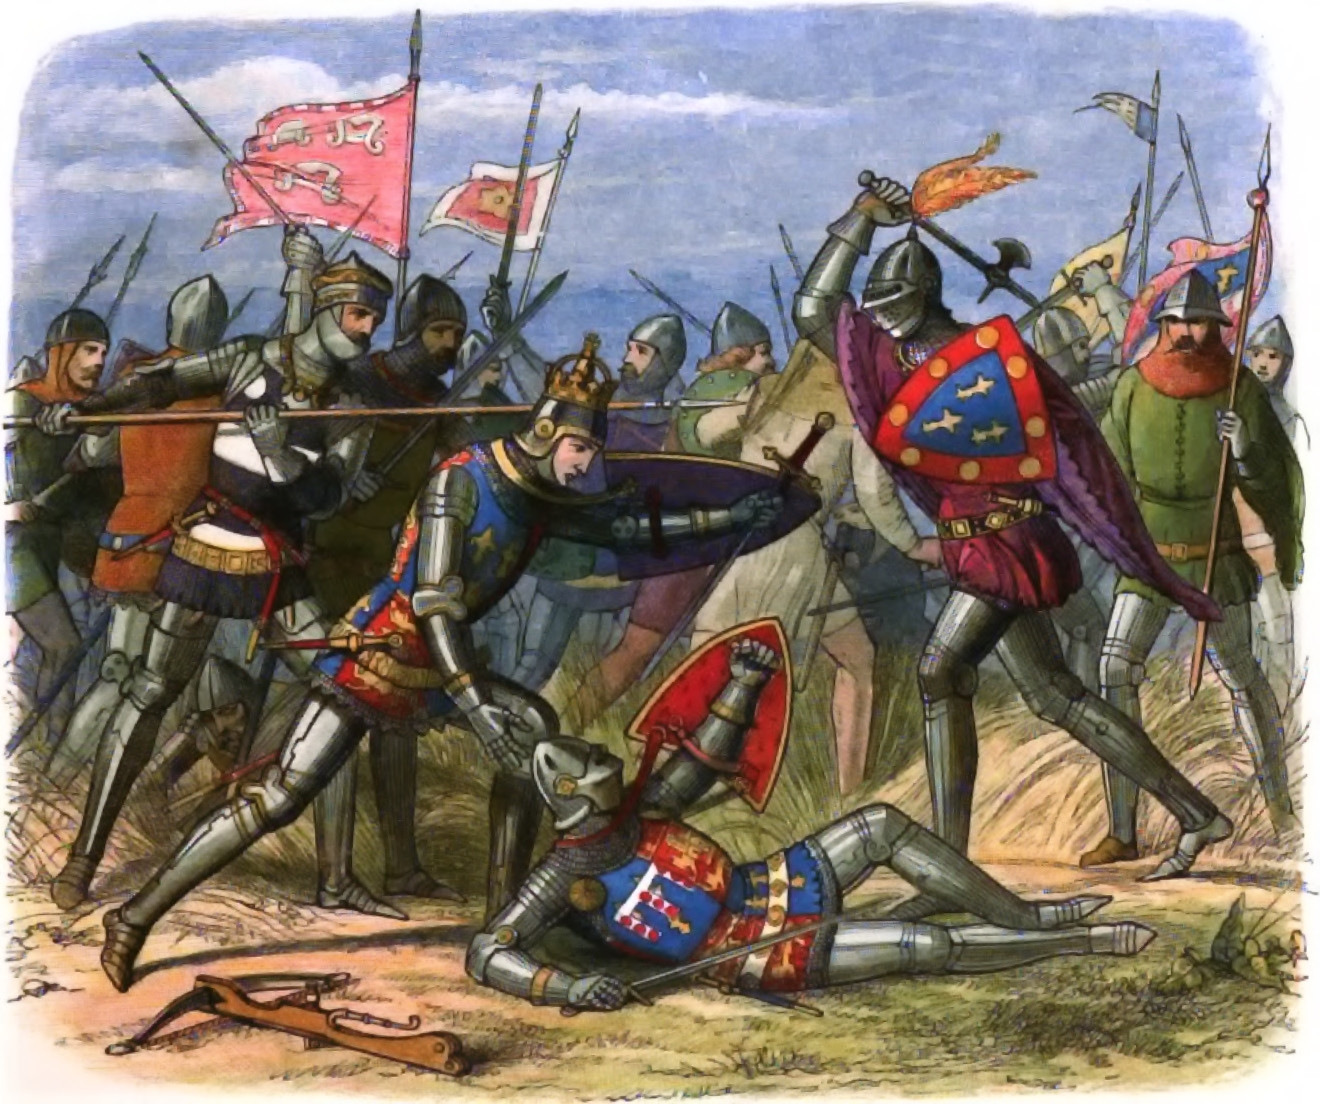 Henry V at the Battle of Agincourt